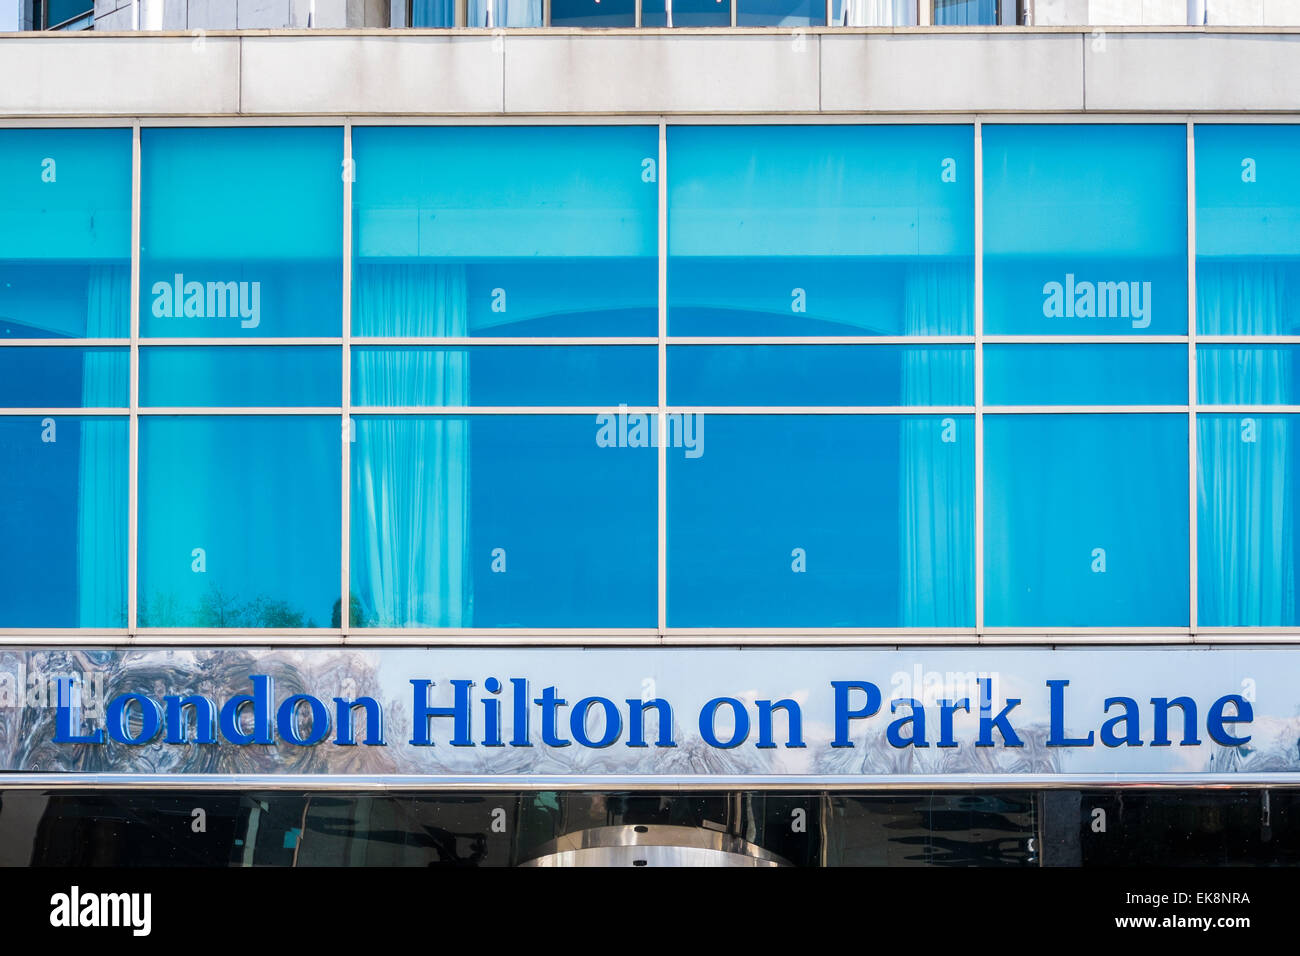 London Hilton on Park Lane - London Stock Photo